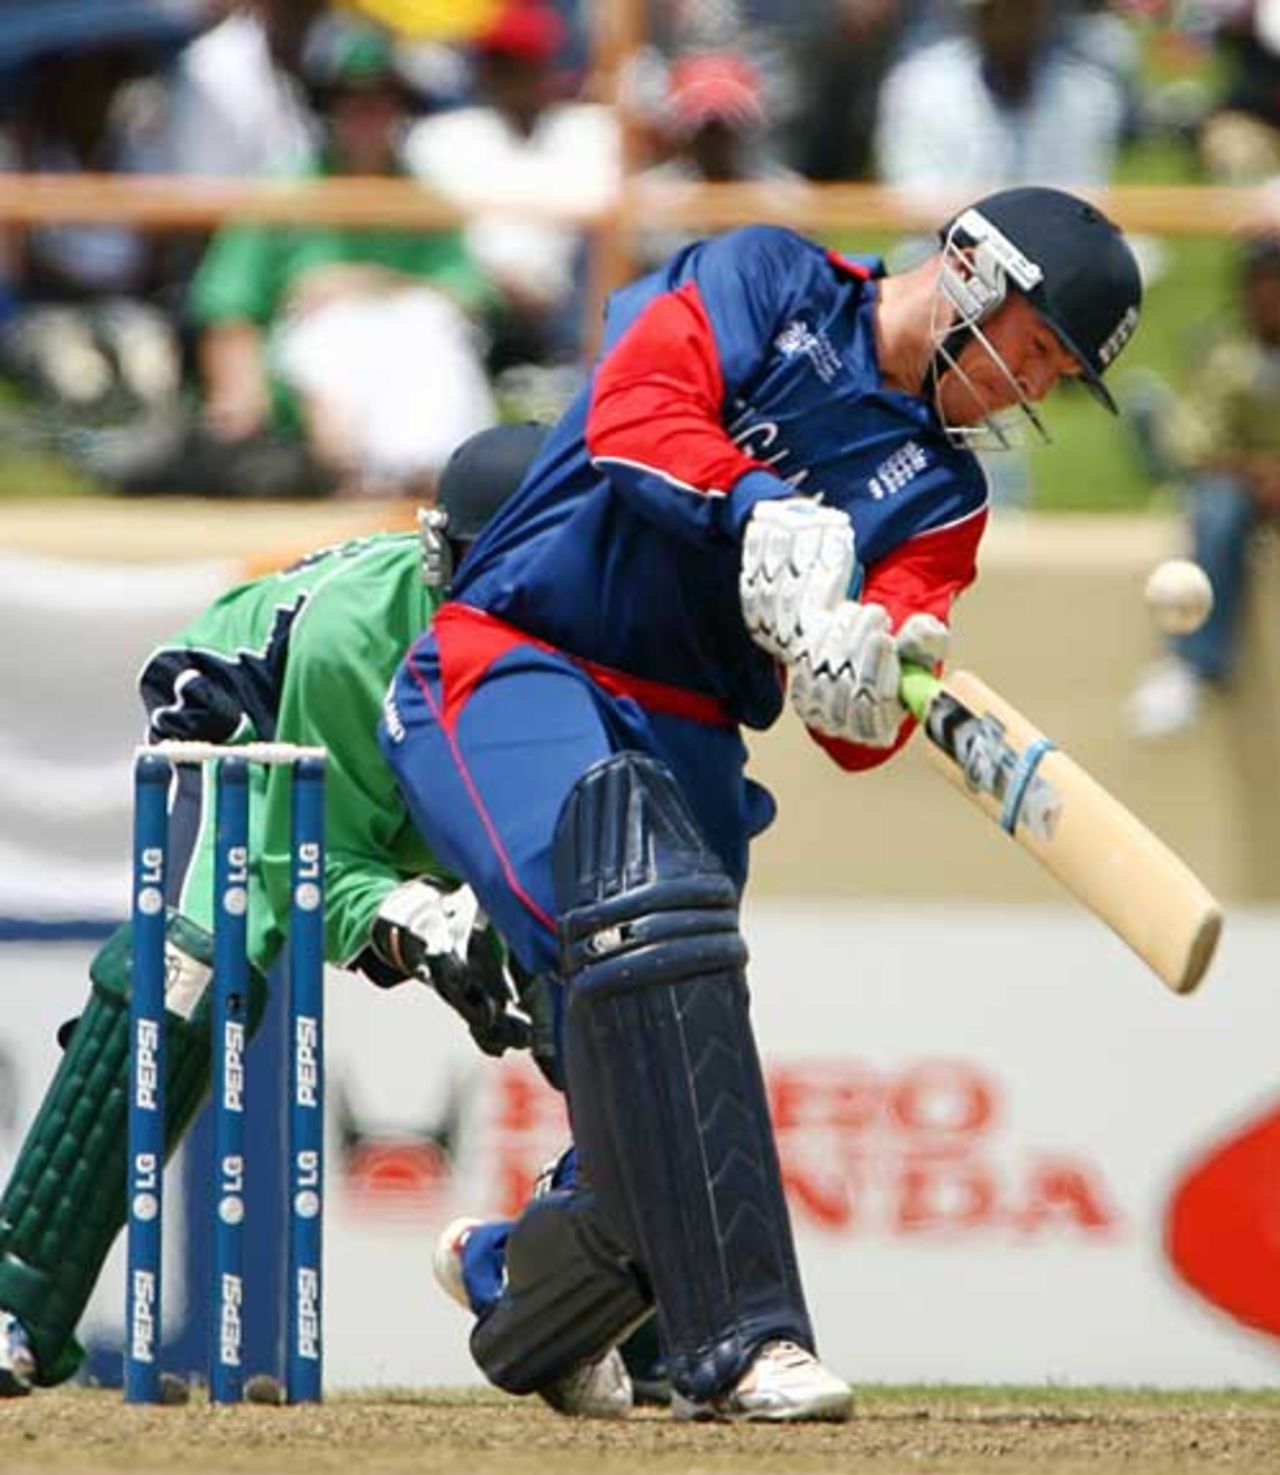 Paul Nixon struck valuable late runs, England v Ireland, Super Eights, Guyana, March 30, 2007